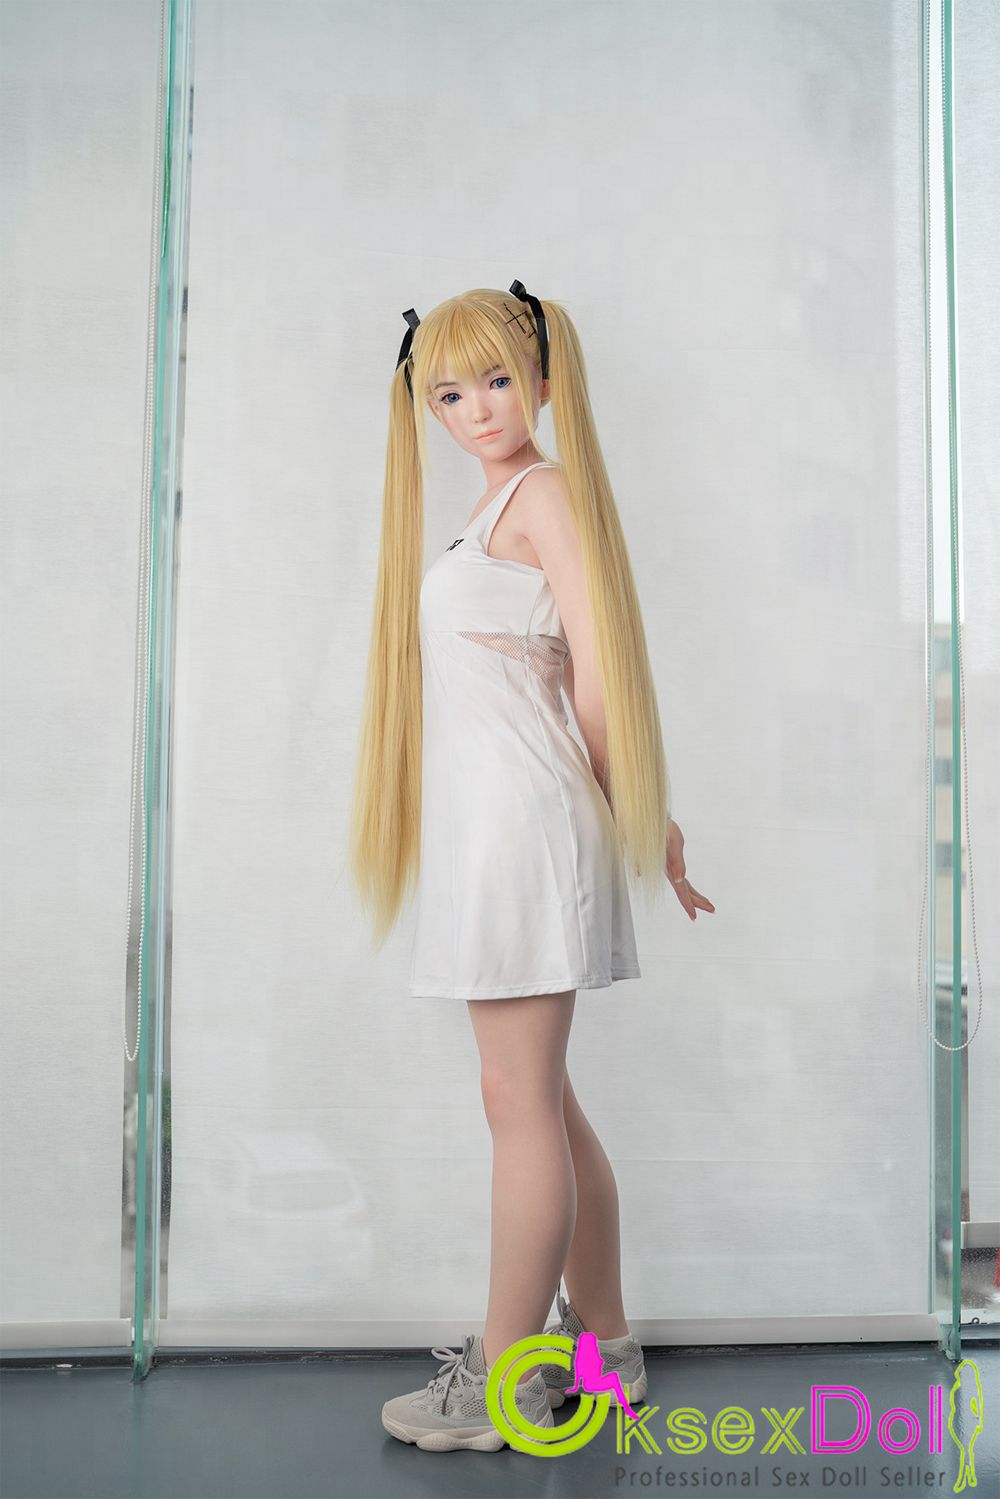 Long Blonde Hair sex dolls images